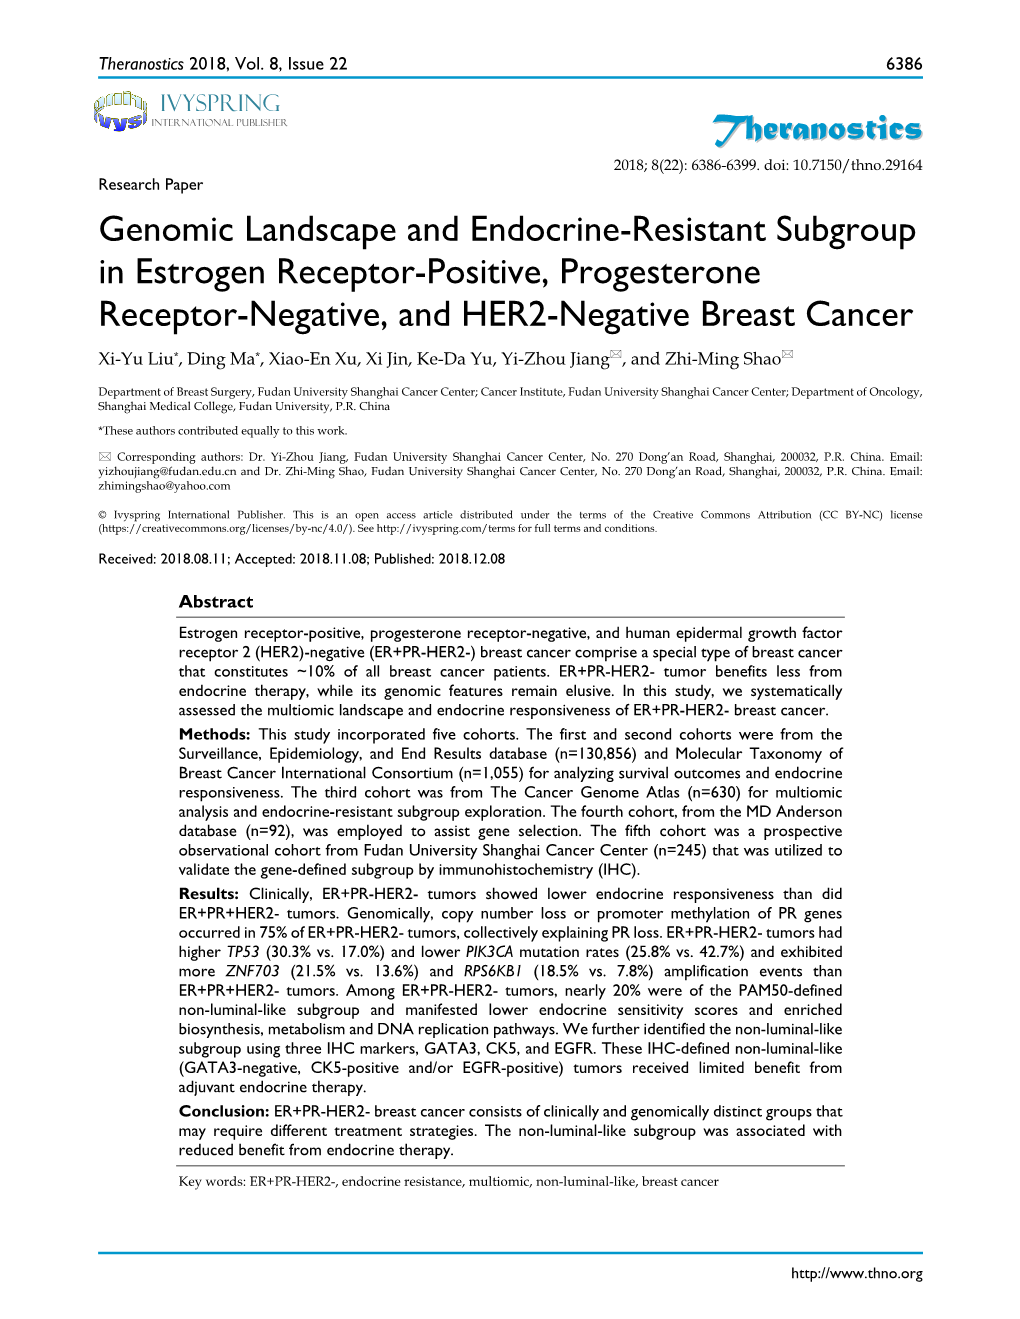 Genomic Landscape and Endocrine-Resistant Subgroup In